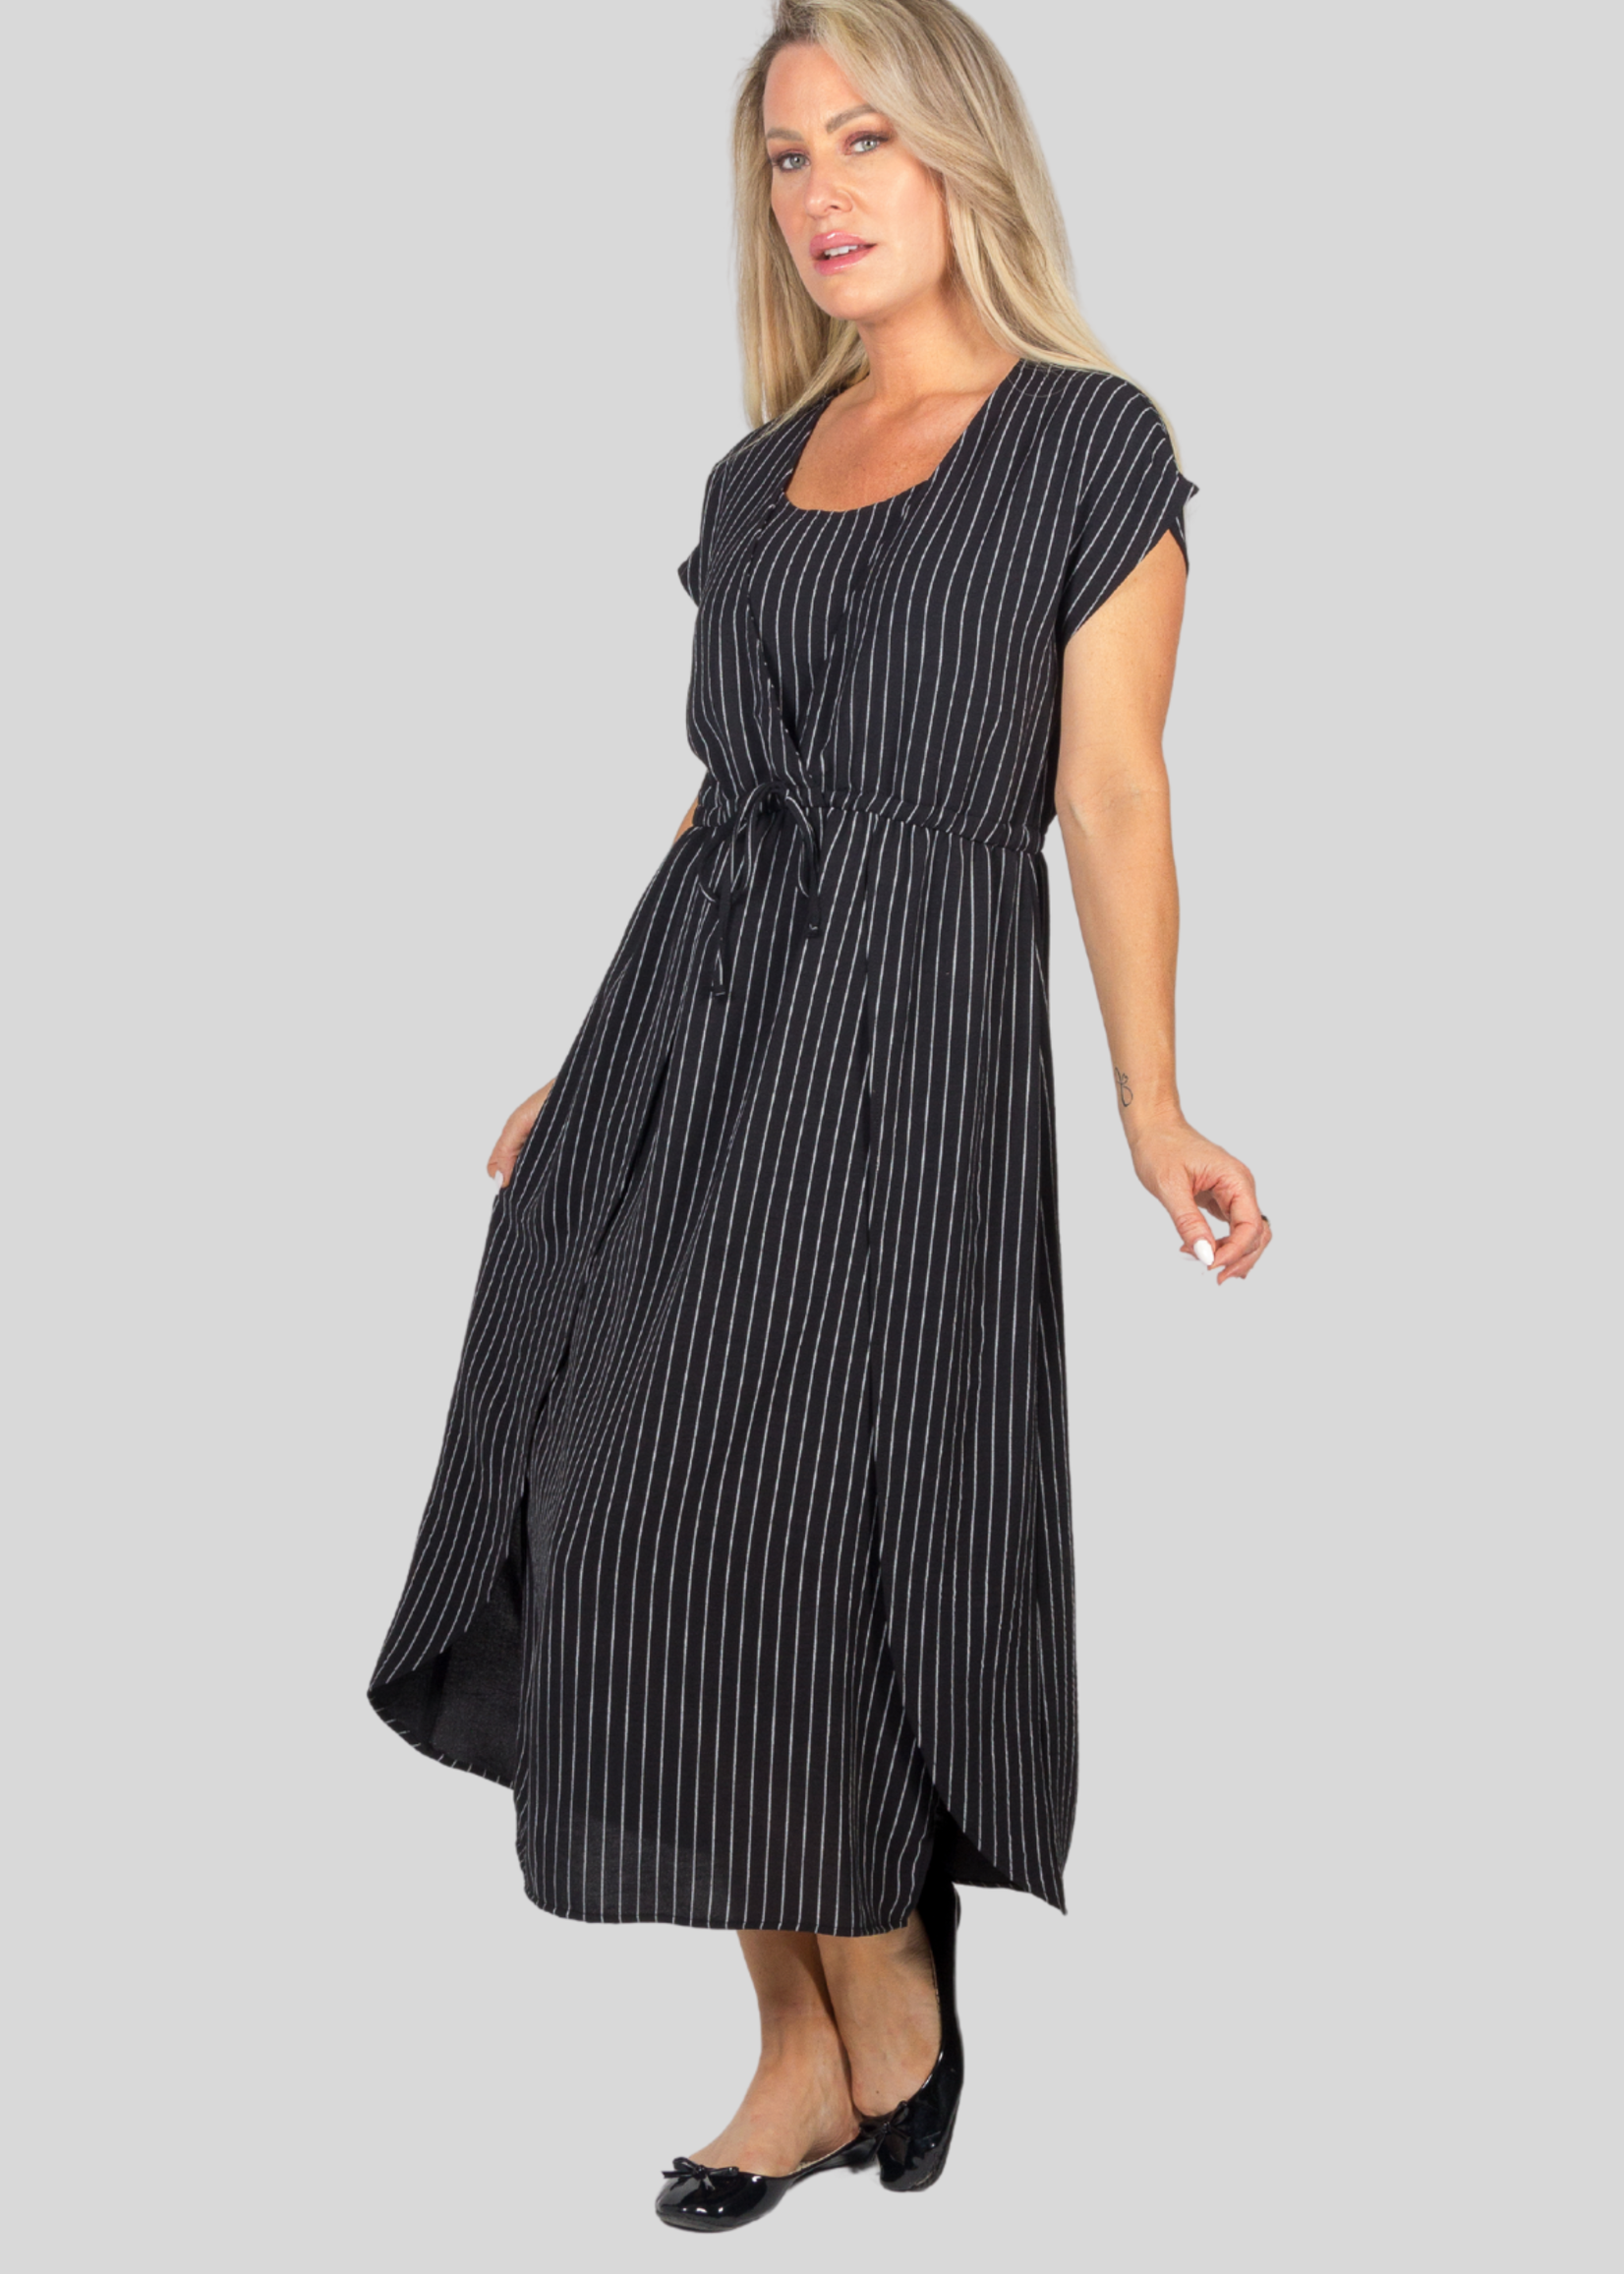 PURE Pure Striped Sleeveless Overlay Dress